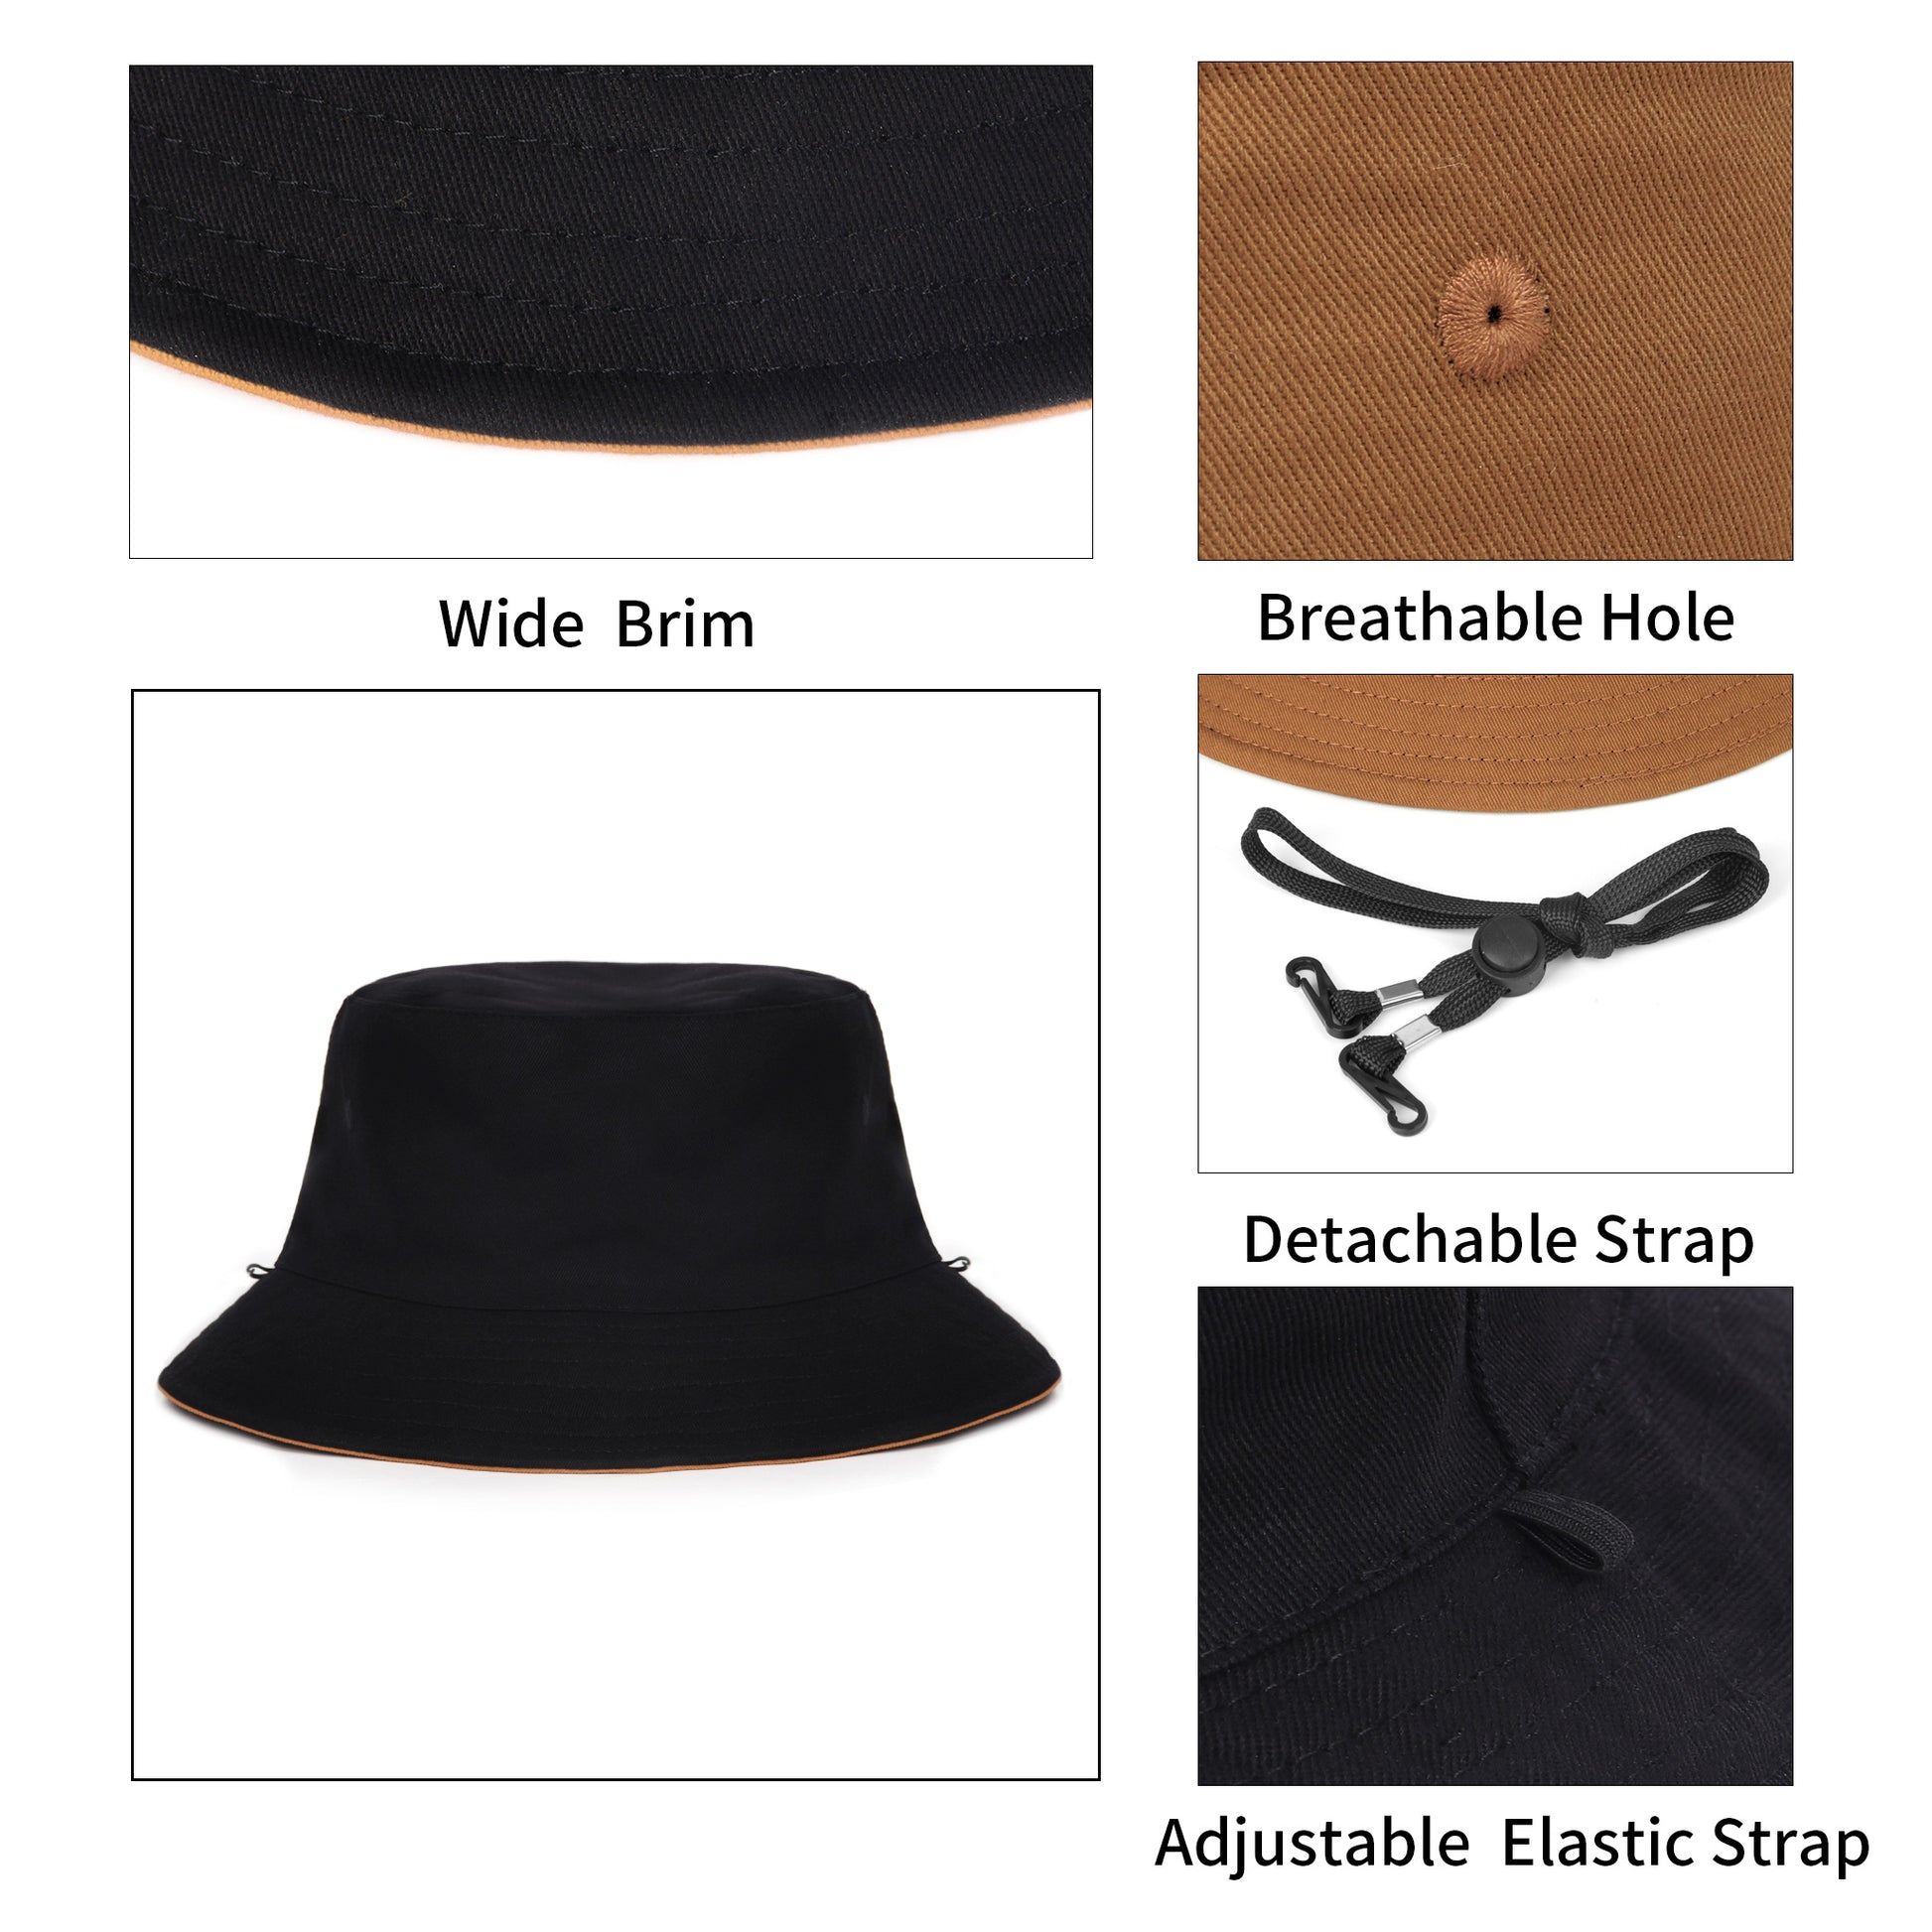 Zylioo Small Quick Dry Bucket Sun Hat,Petite Water Repellent Fisherman Hats,Lightweight Summer Travel Hat with Strap